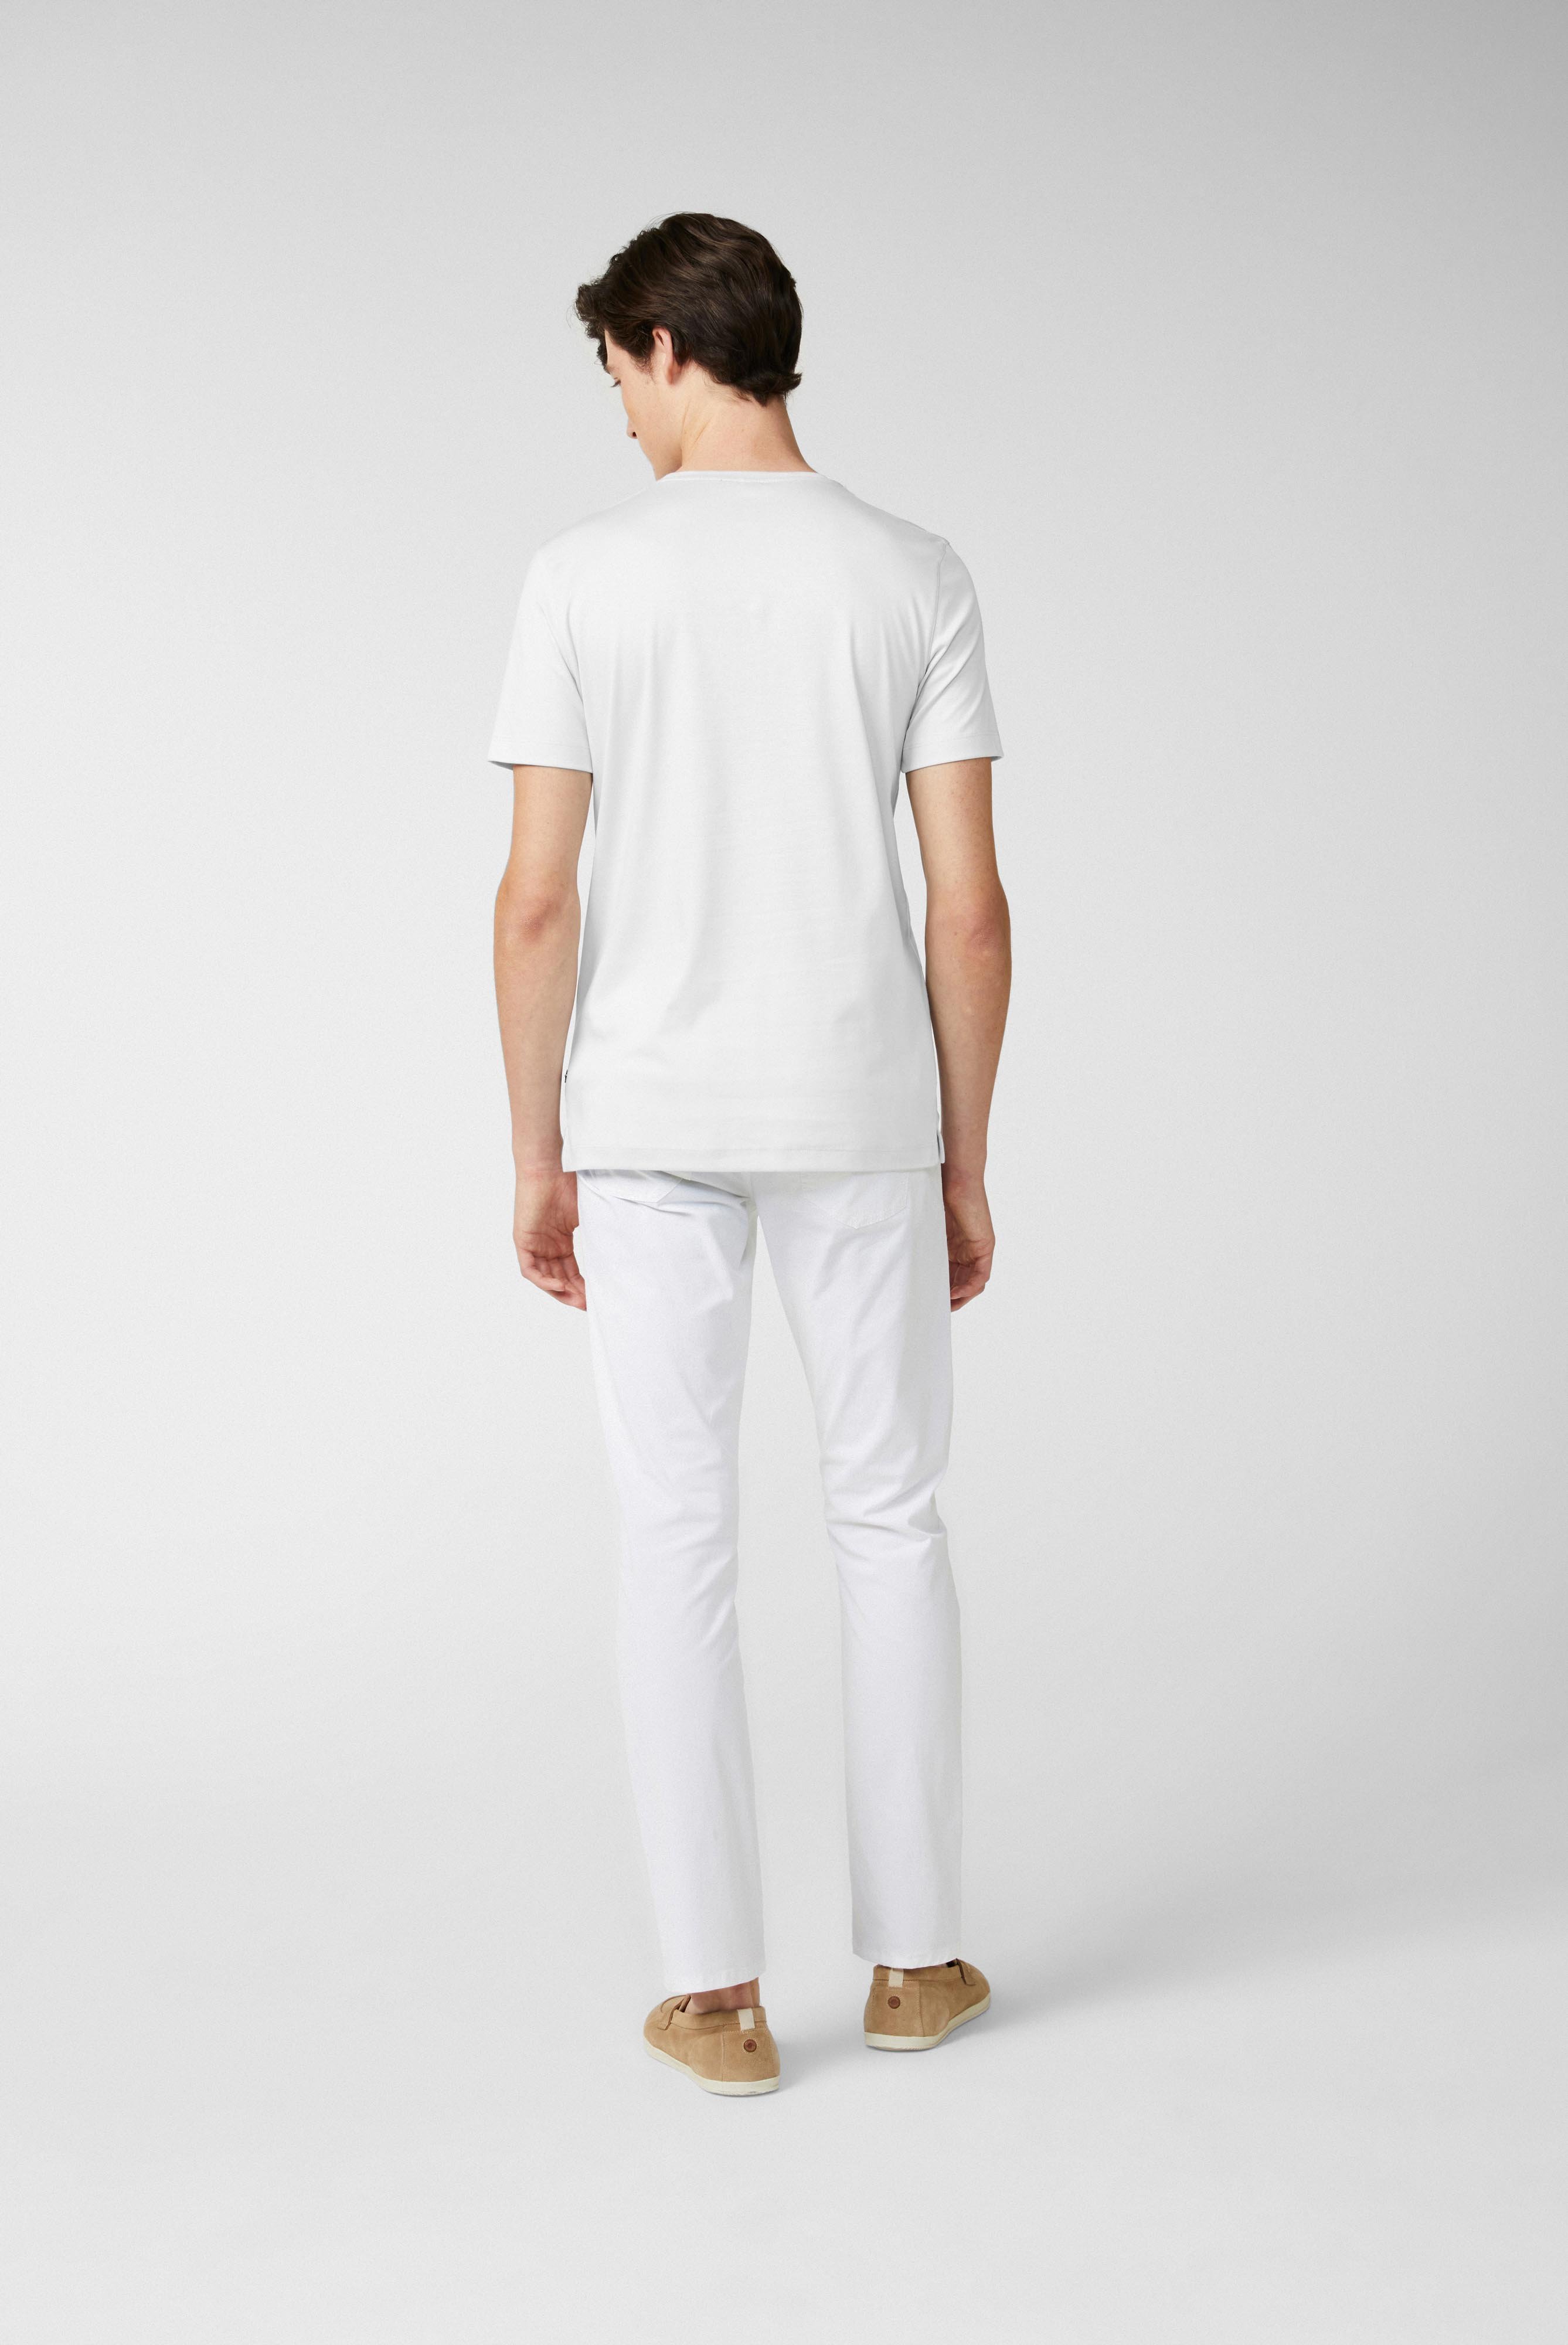 T-Shirts+Rundhals Jersey T-Shirt Slim Fit+20.1717.UX.180031.000.XL